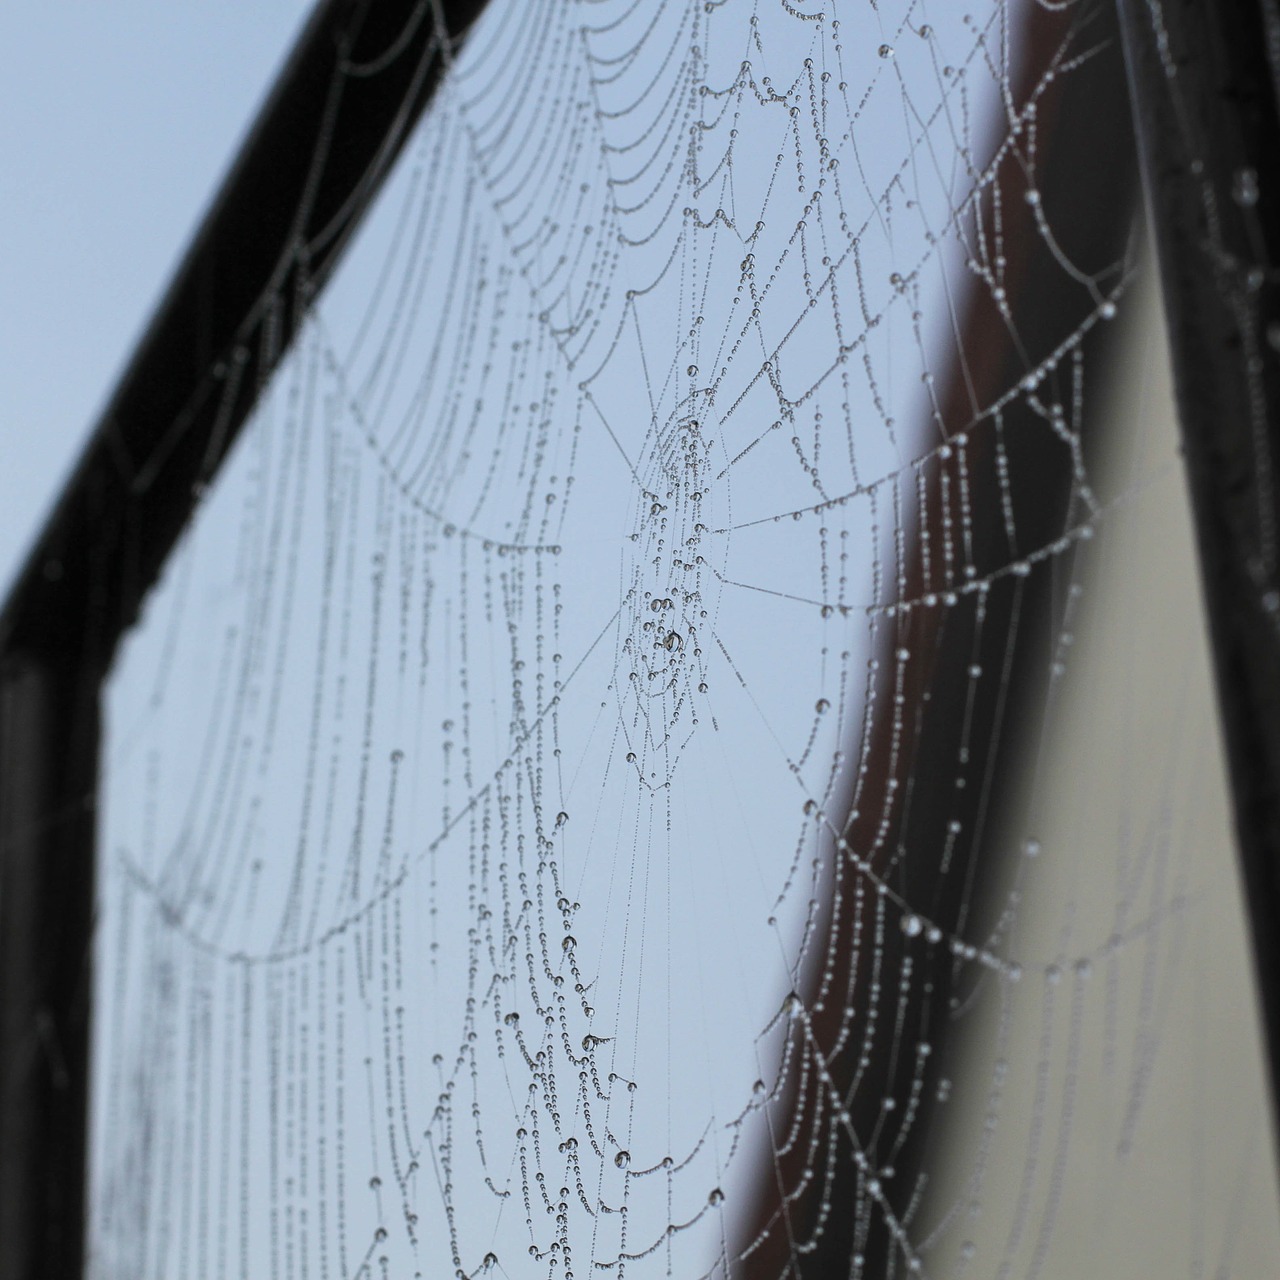 spider network cobweb free photo